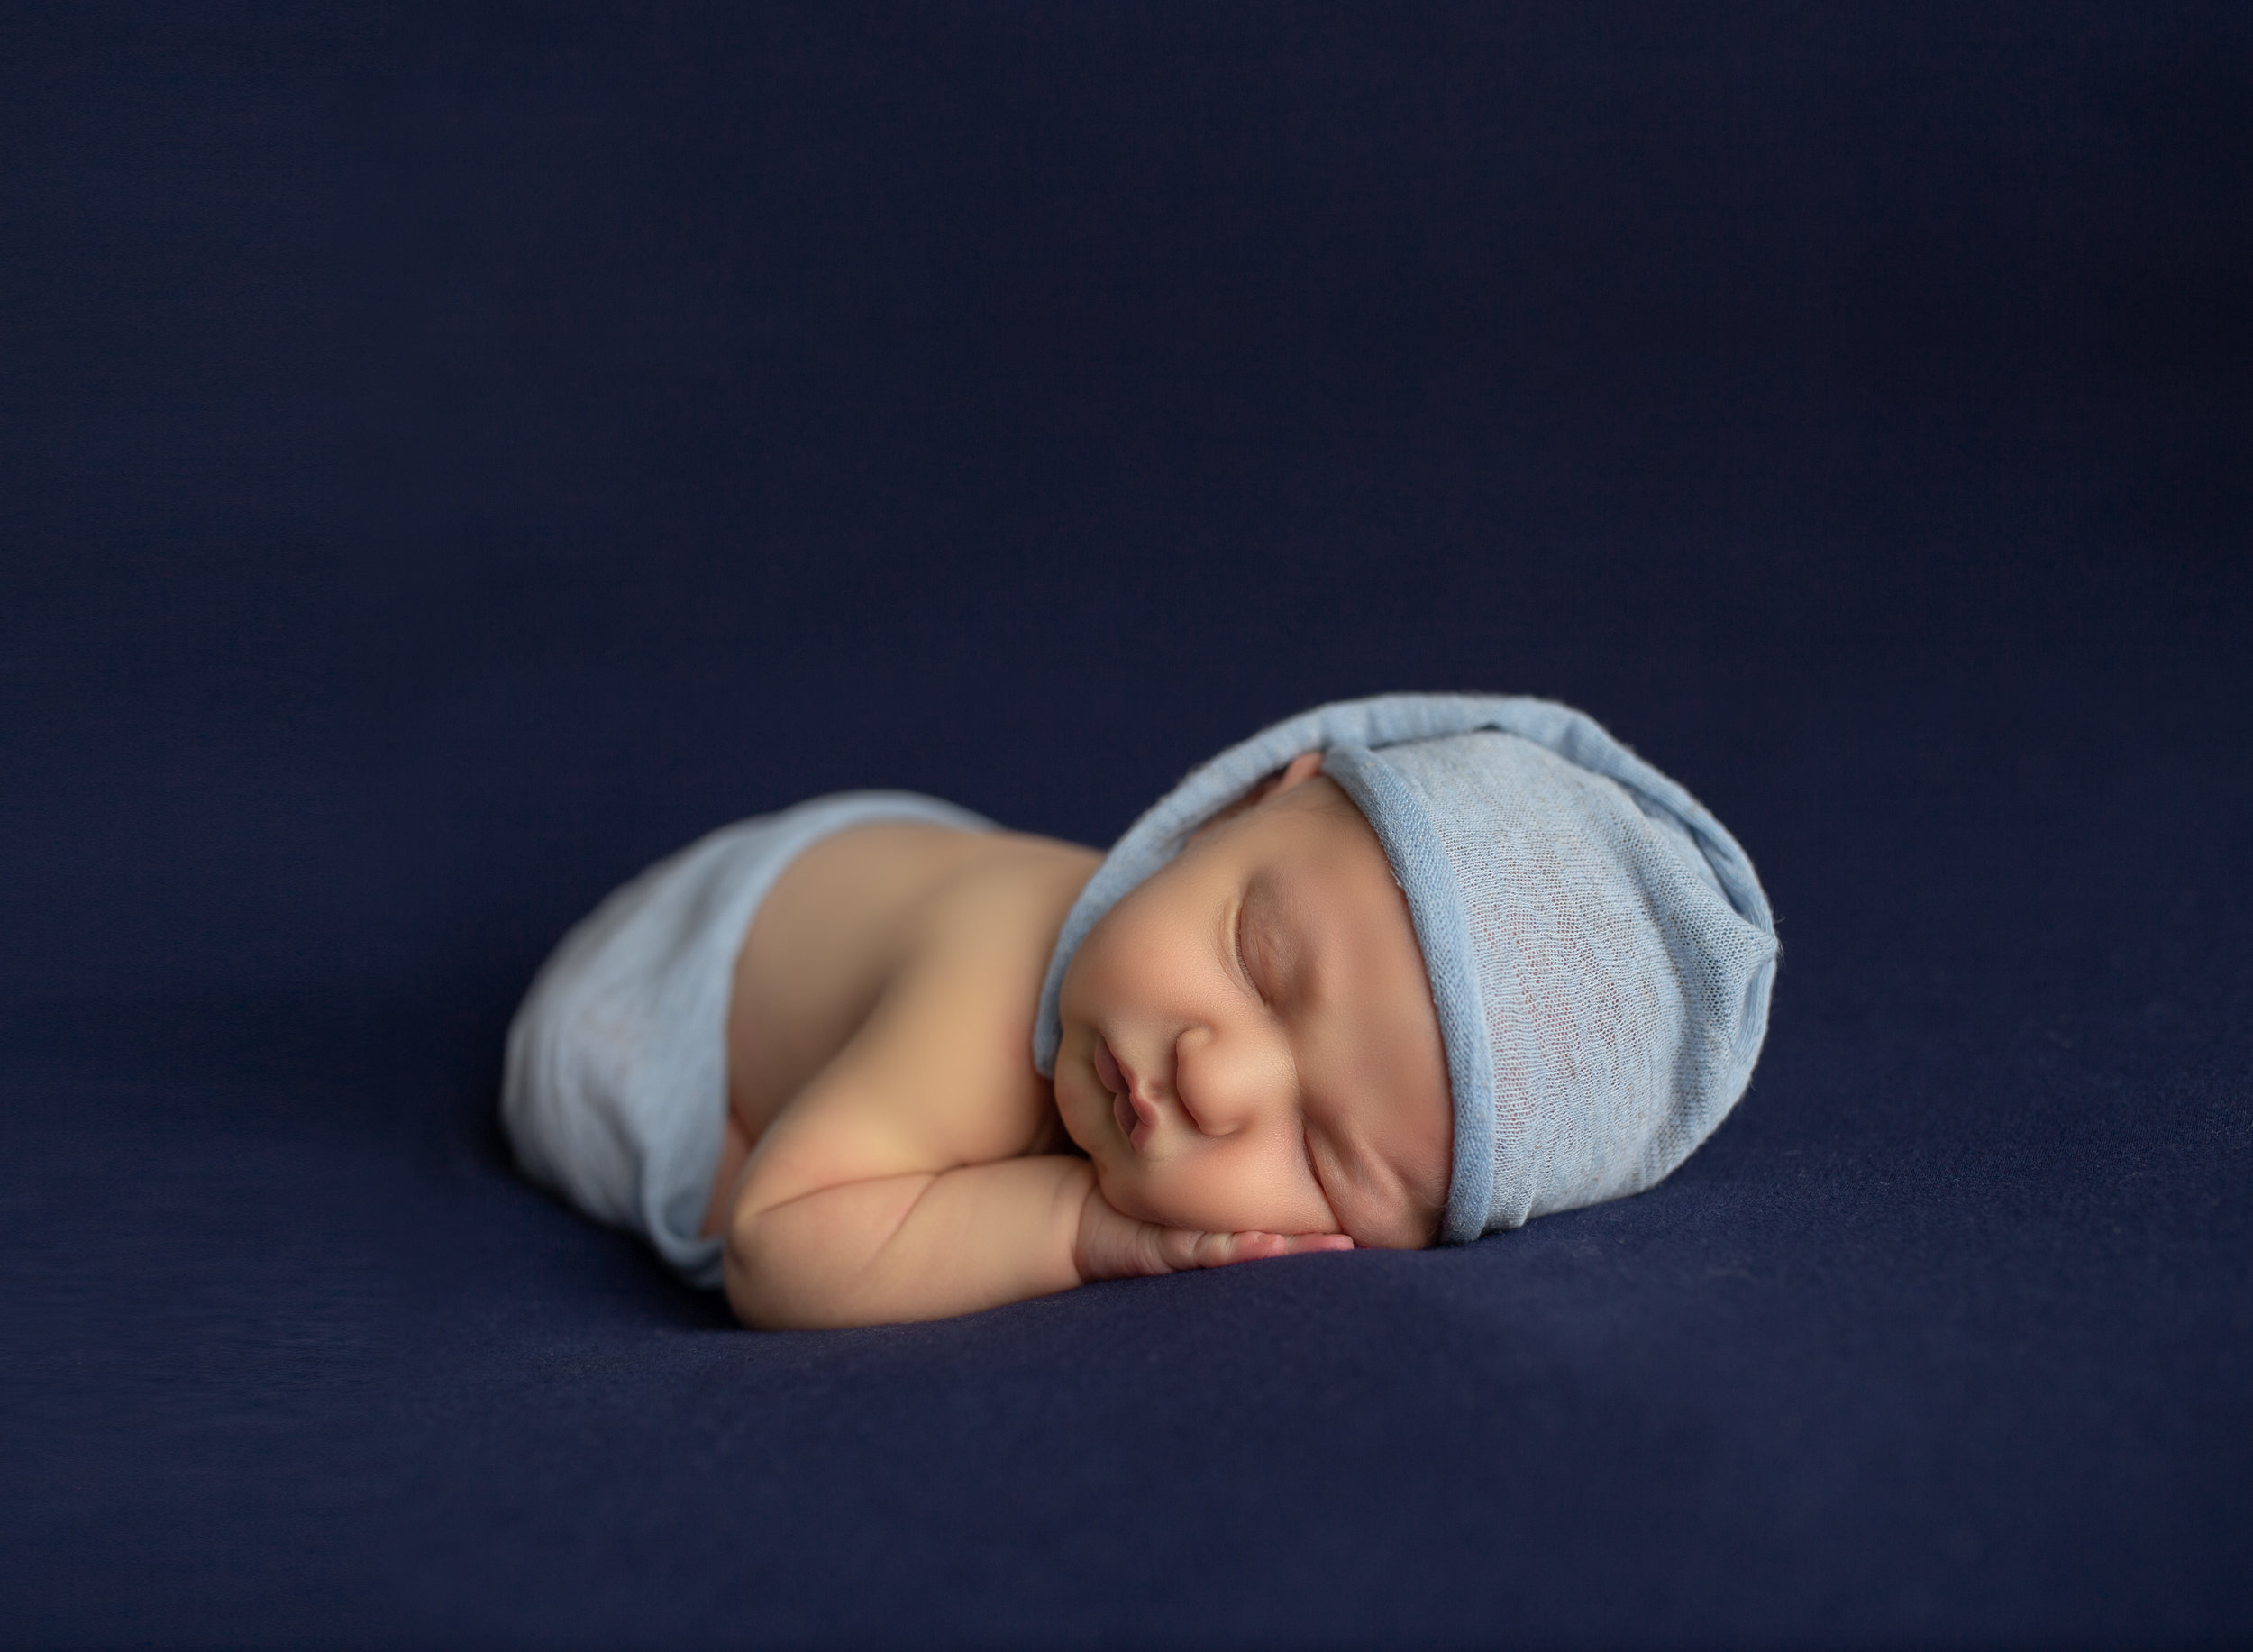 Fort Lauderdale Newborn Photographer, boca raton newborn photographer, south florida newborn photography